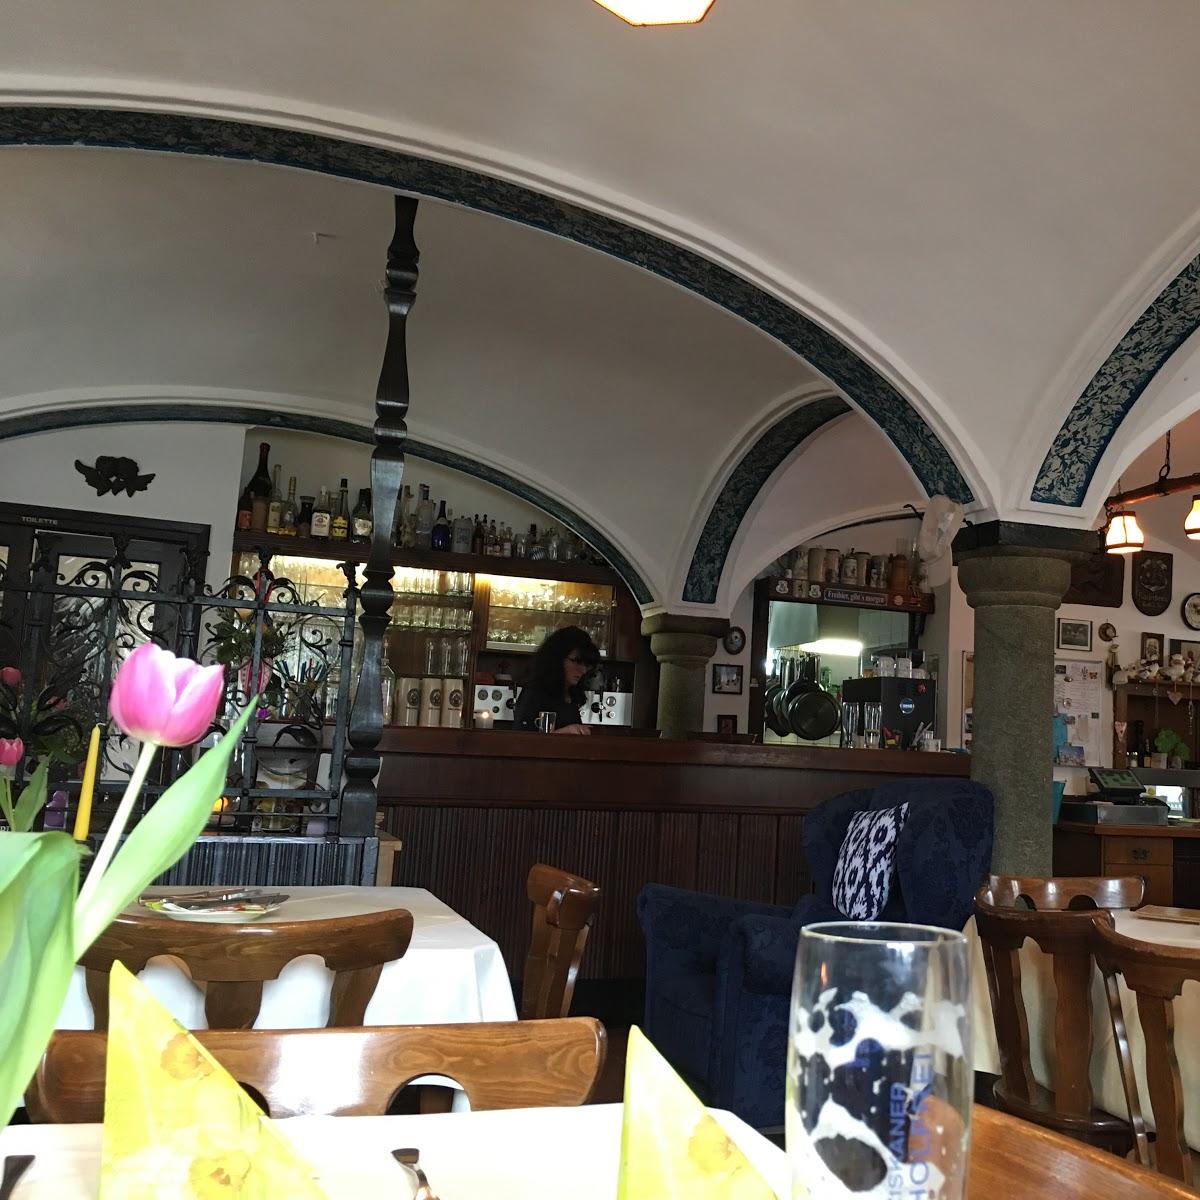 Restaurant "Bräustüberl" in  Inn